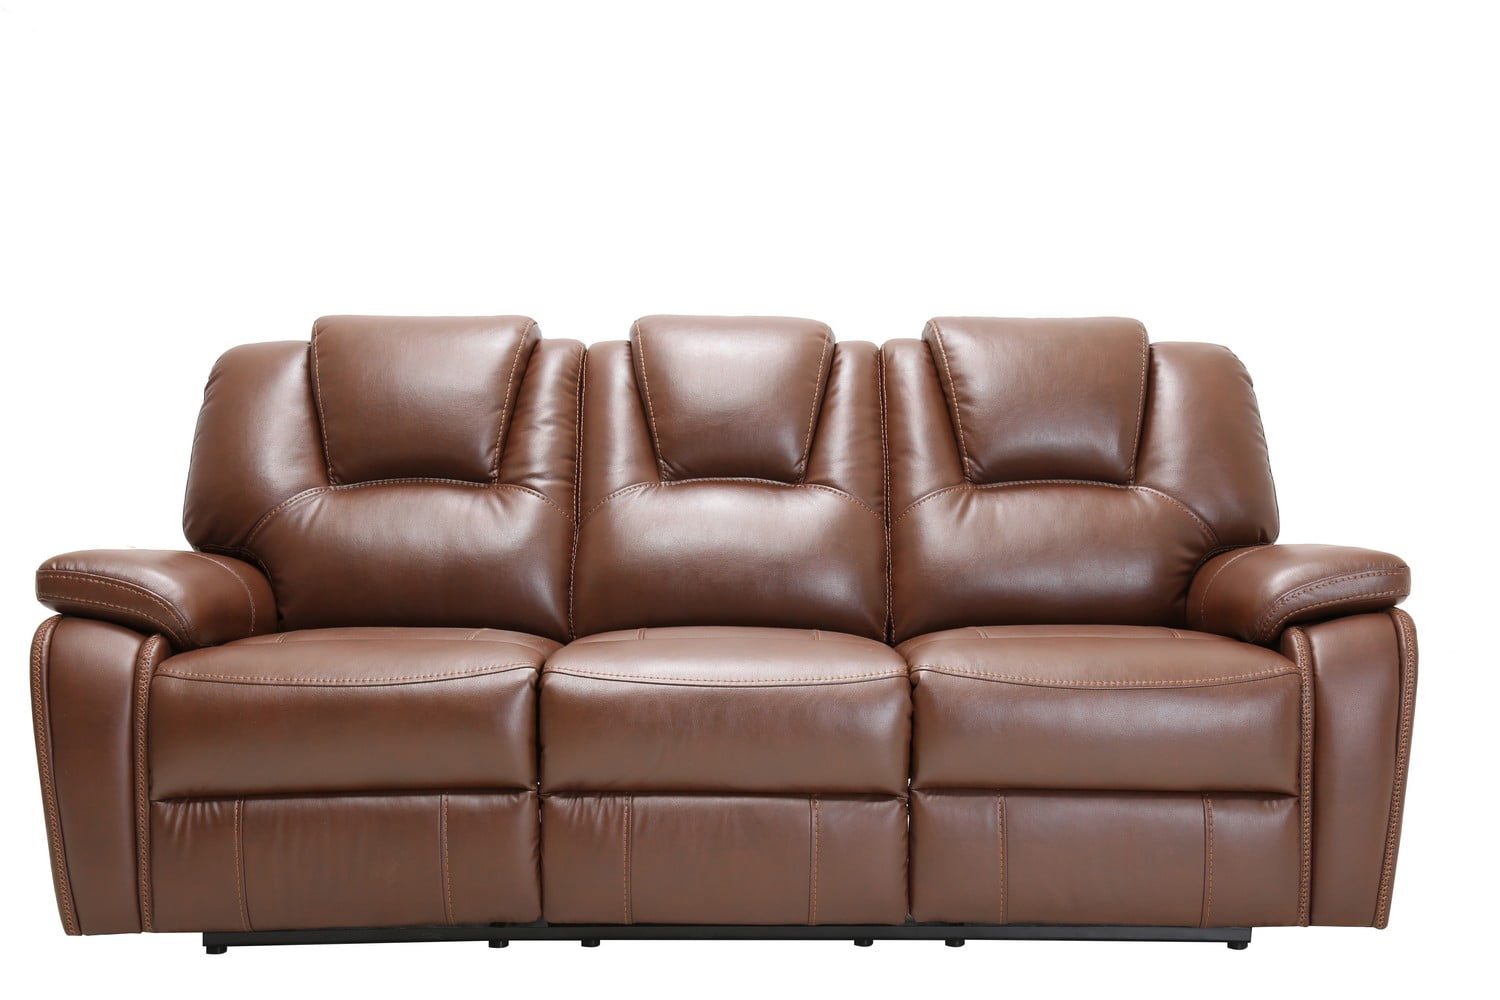 millcroft leather power reclining sofa brown